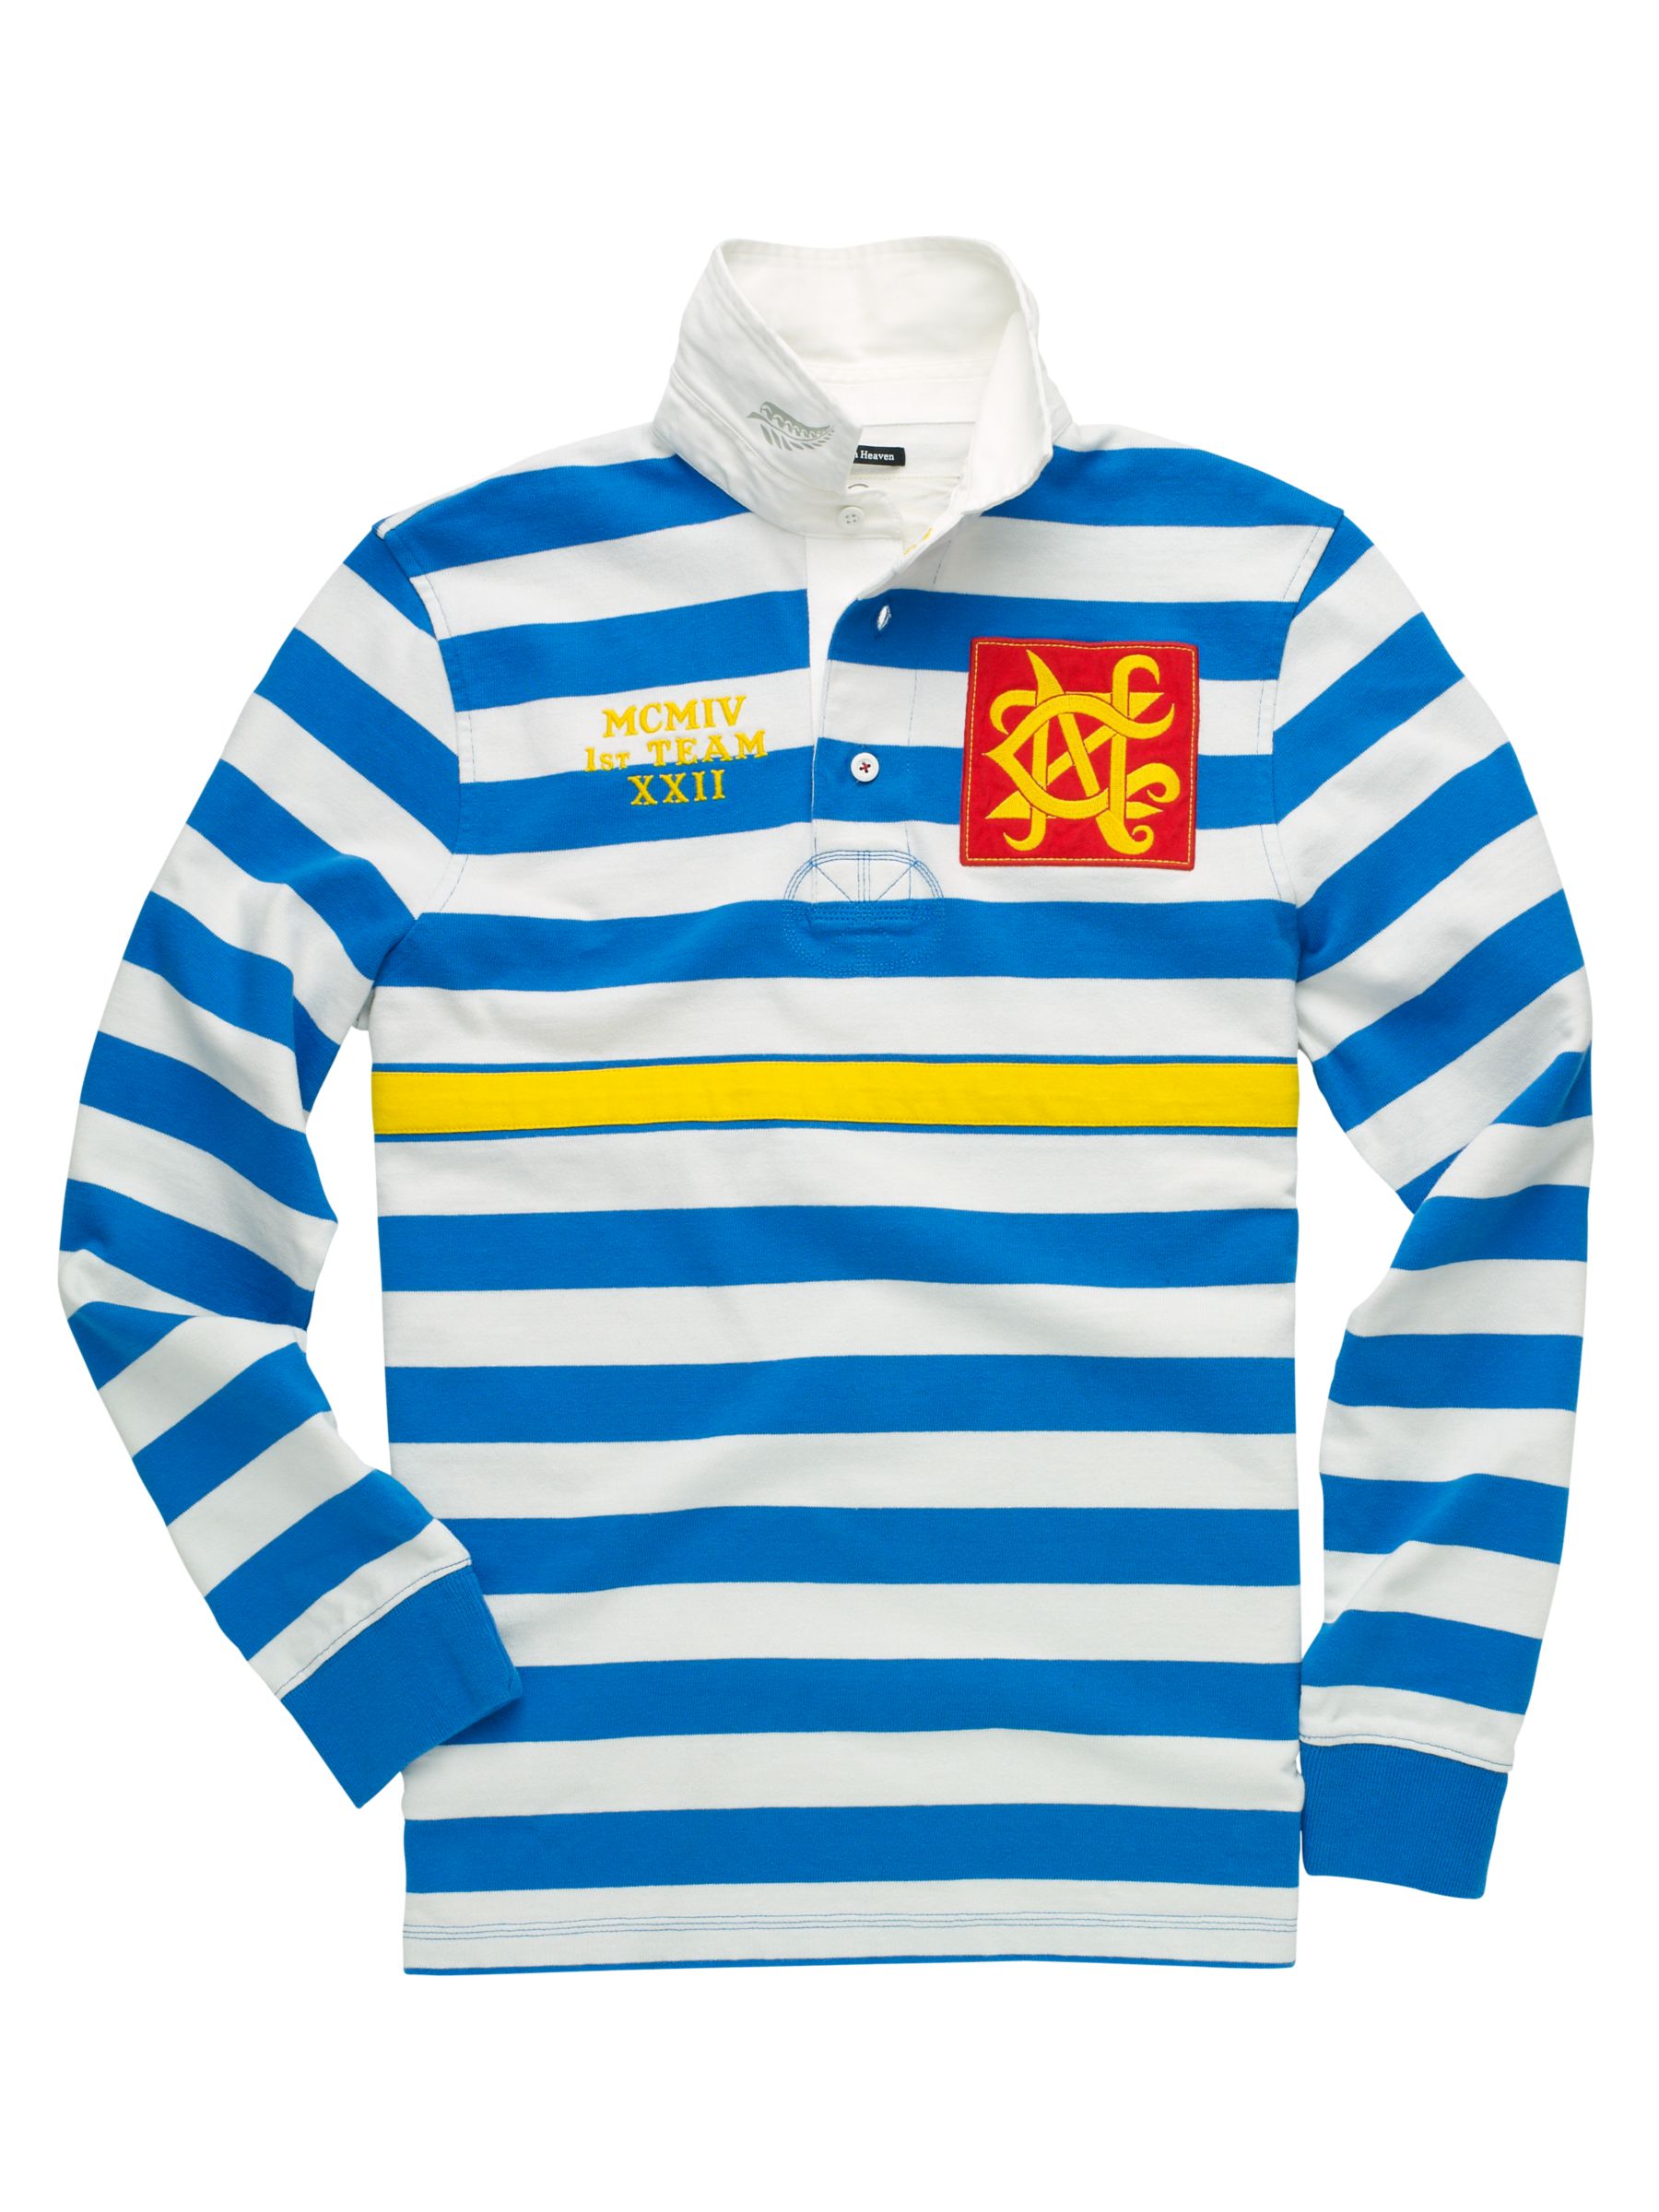 Canterbury Blenheim Multi Stripe Rugby Shirt, Blue